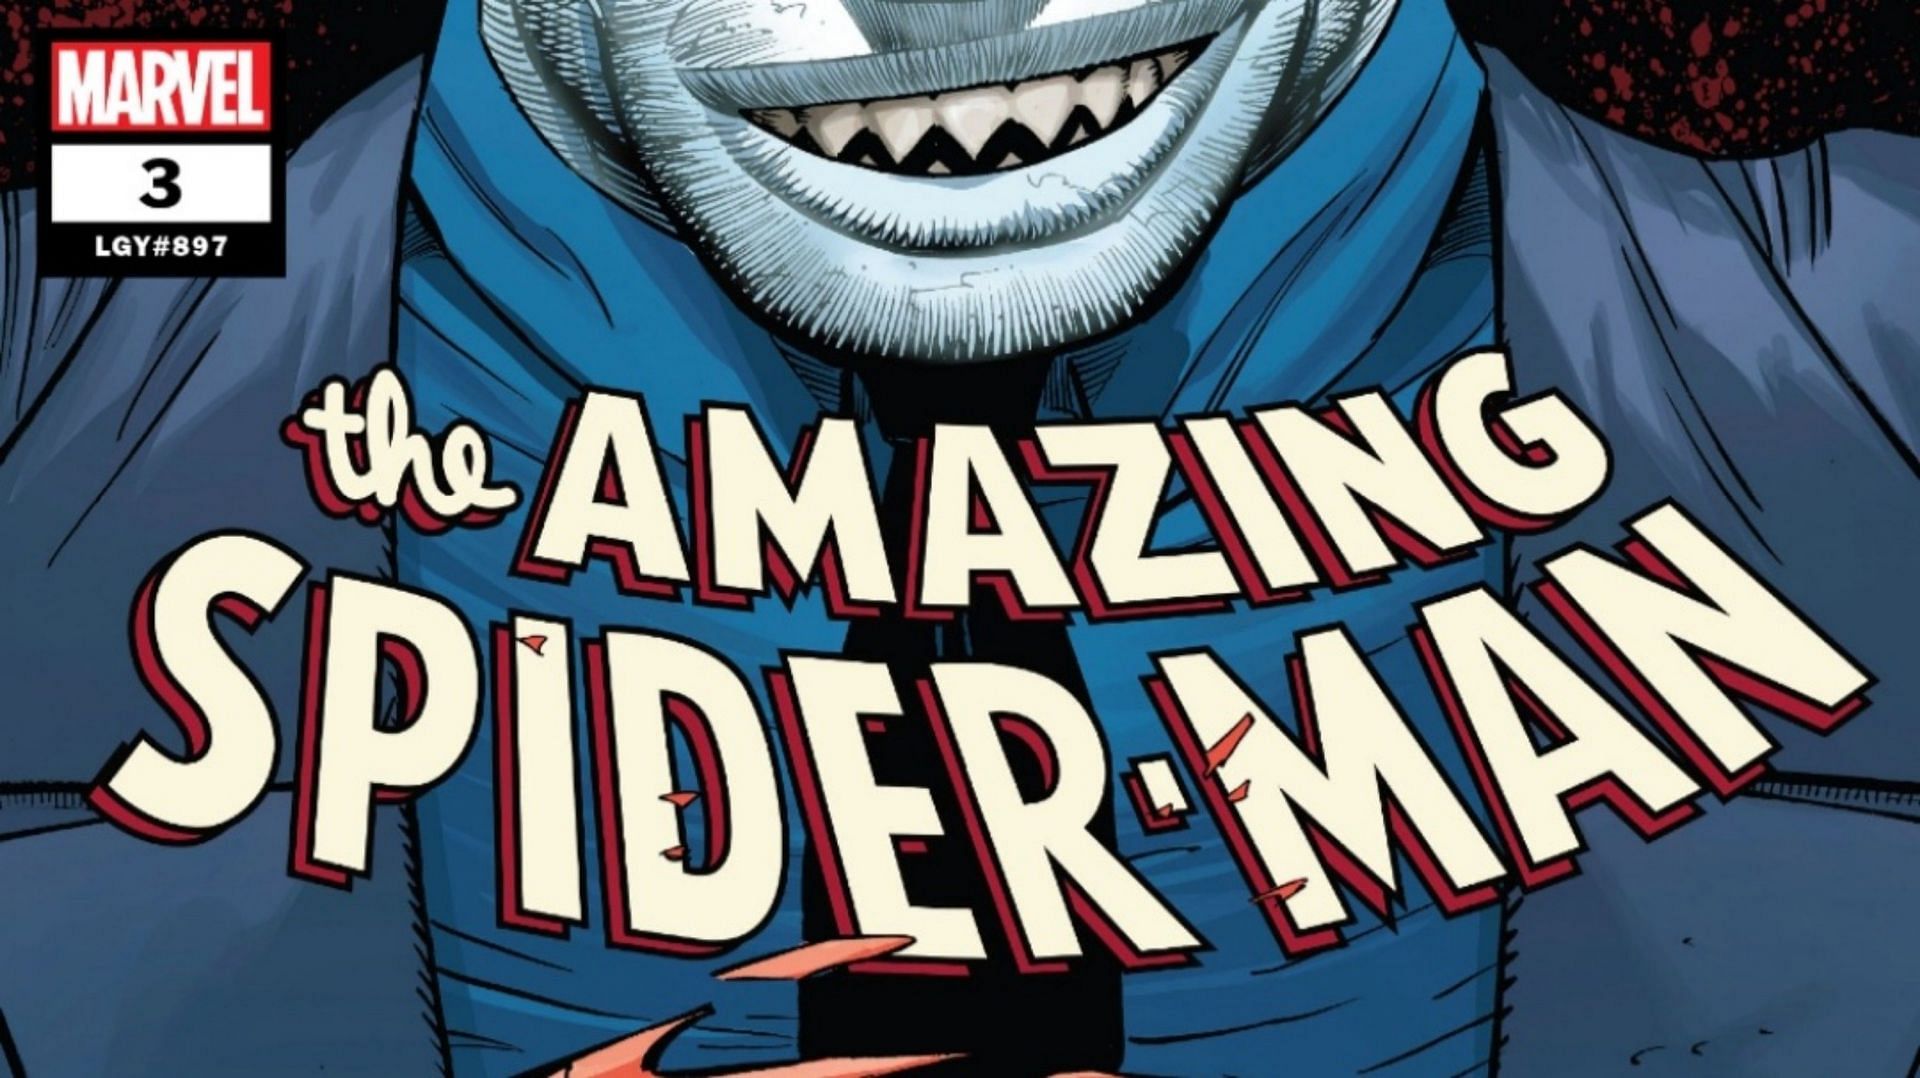 The Amazing Spider-Man #3 (Image via Marvel Comics)